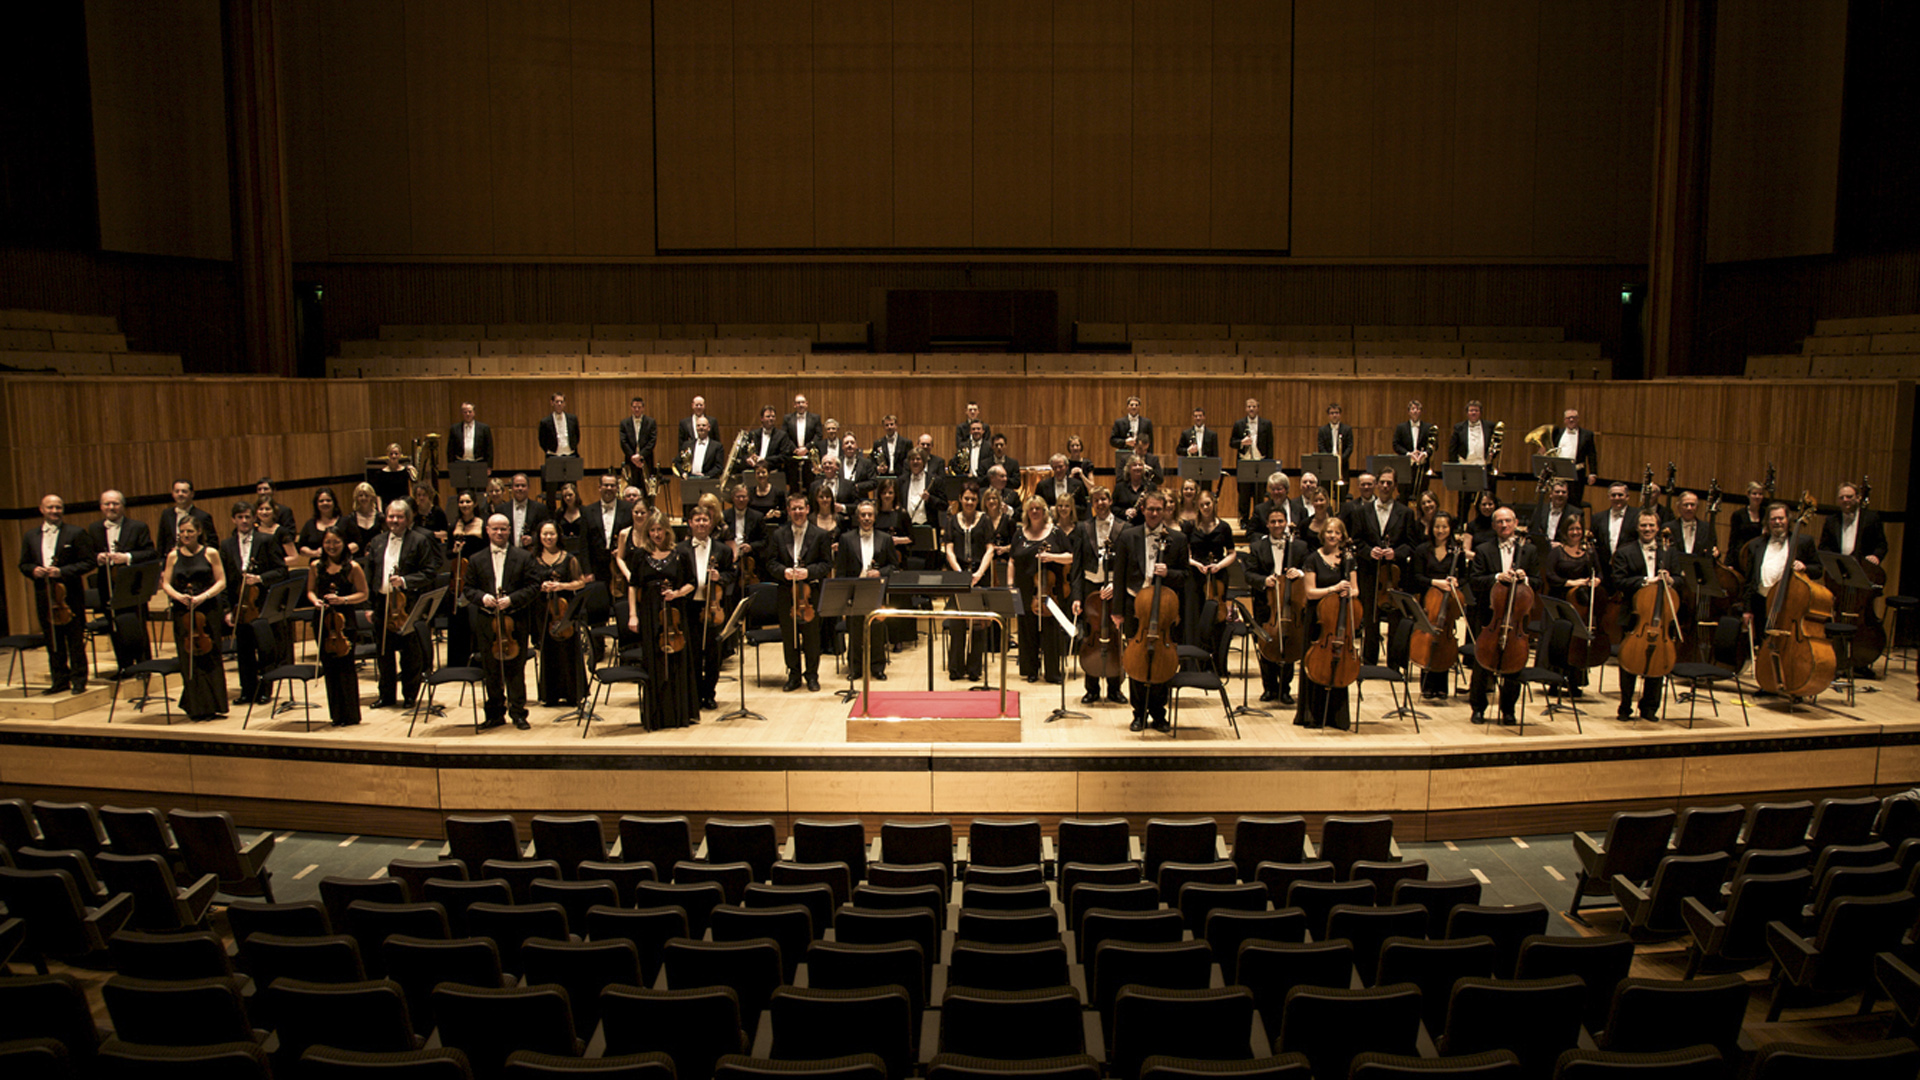 The Wonder Of You av Royal Philharmonic Orchestra